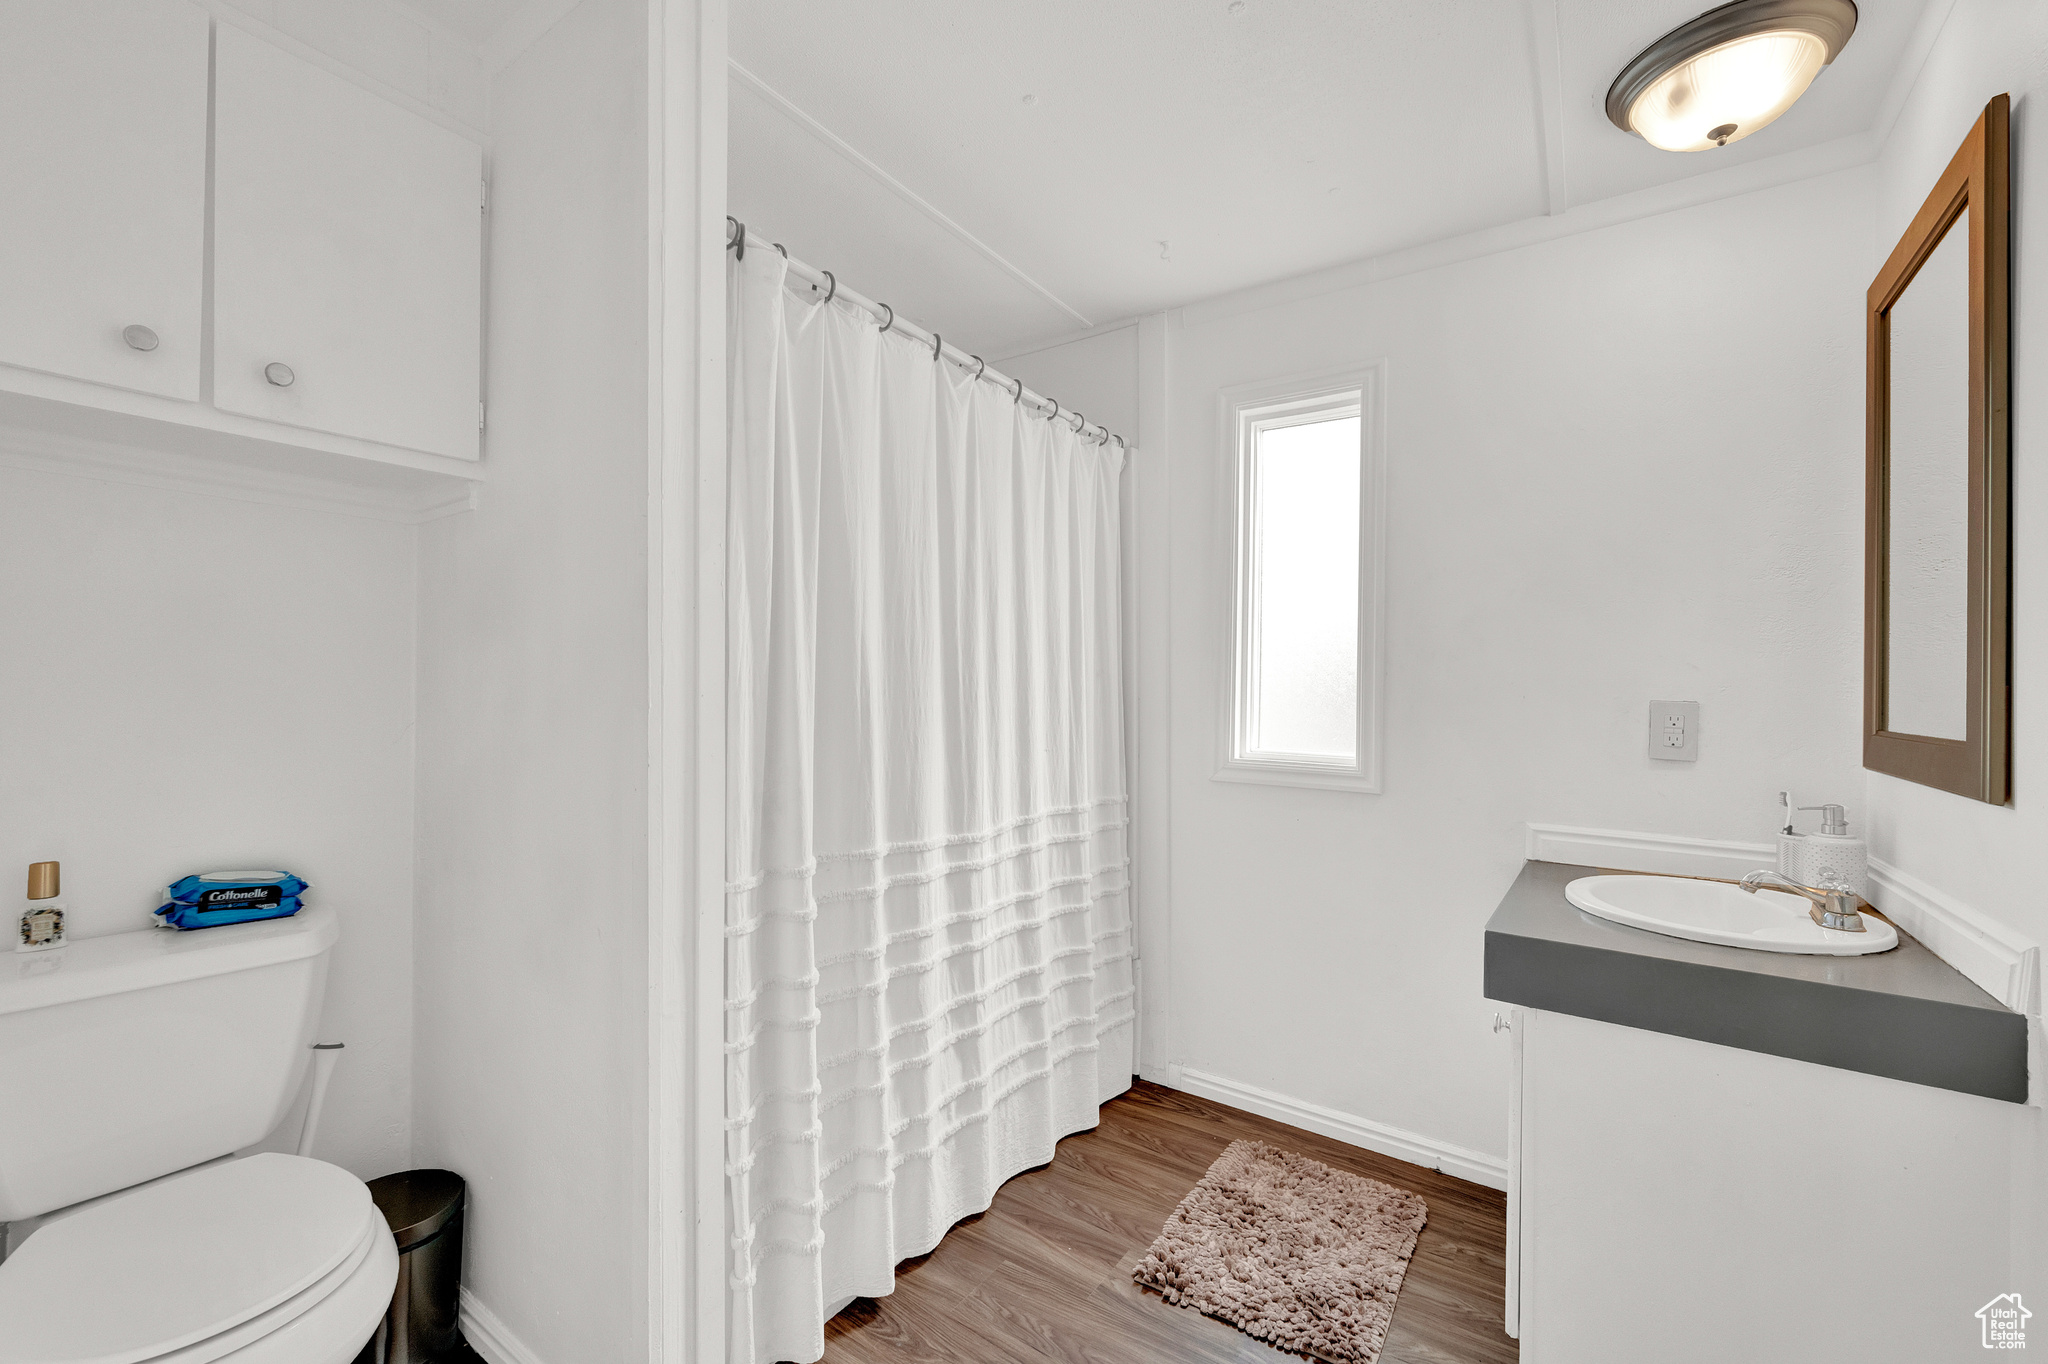 Bathroom with wood-type flooring, toilet, and vanity